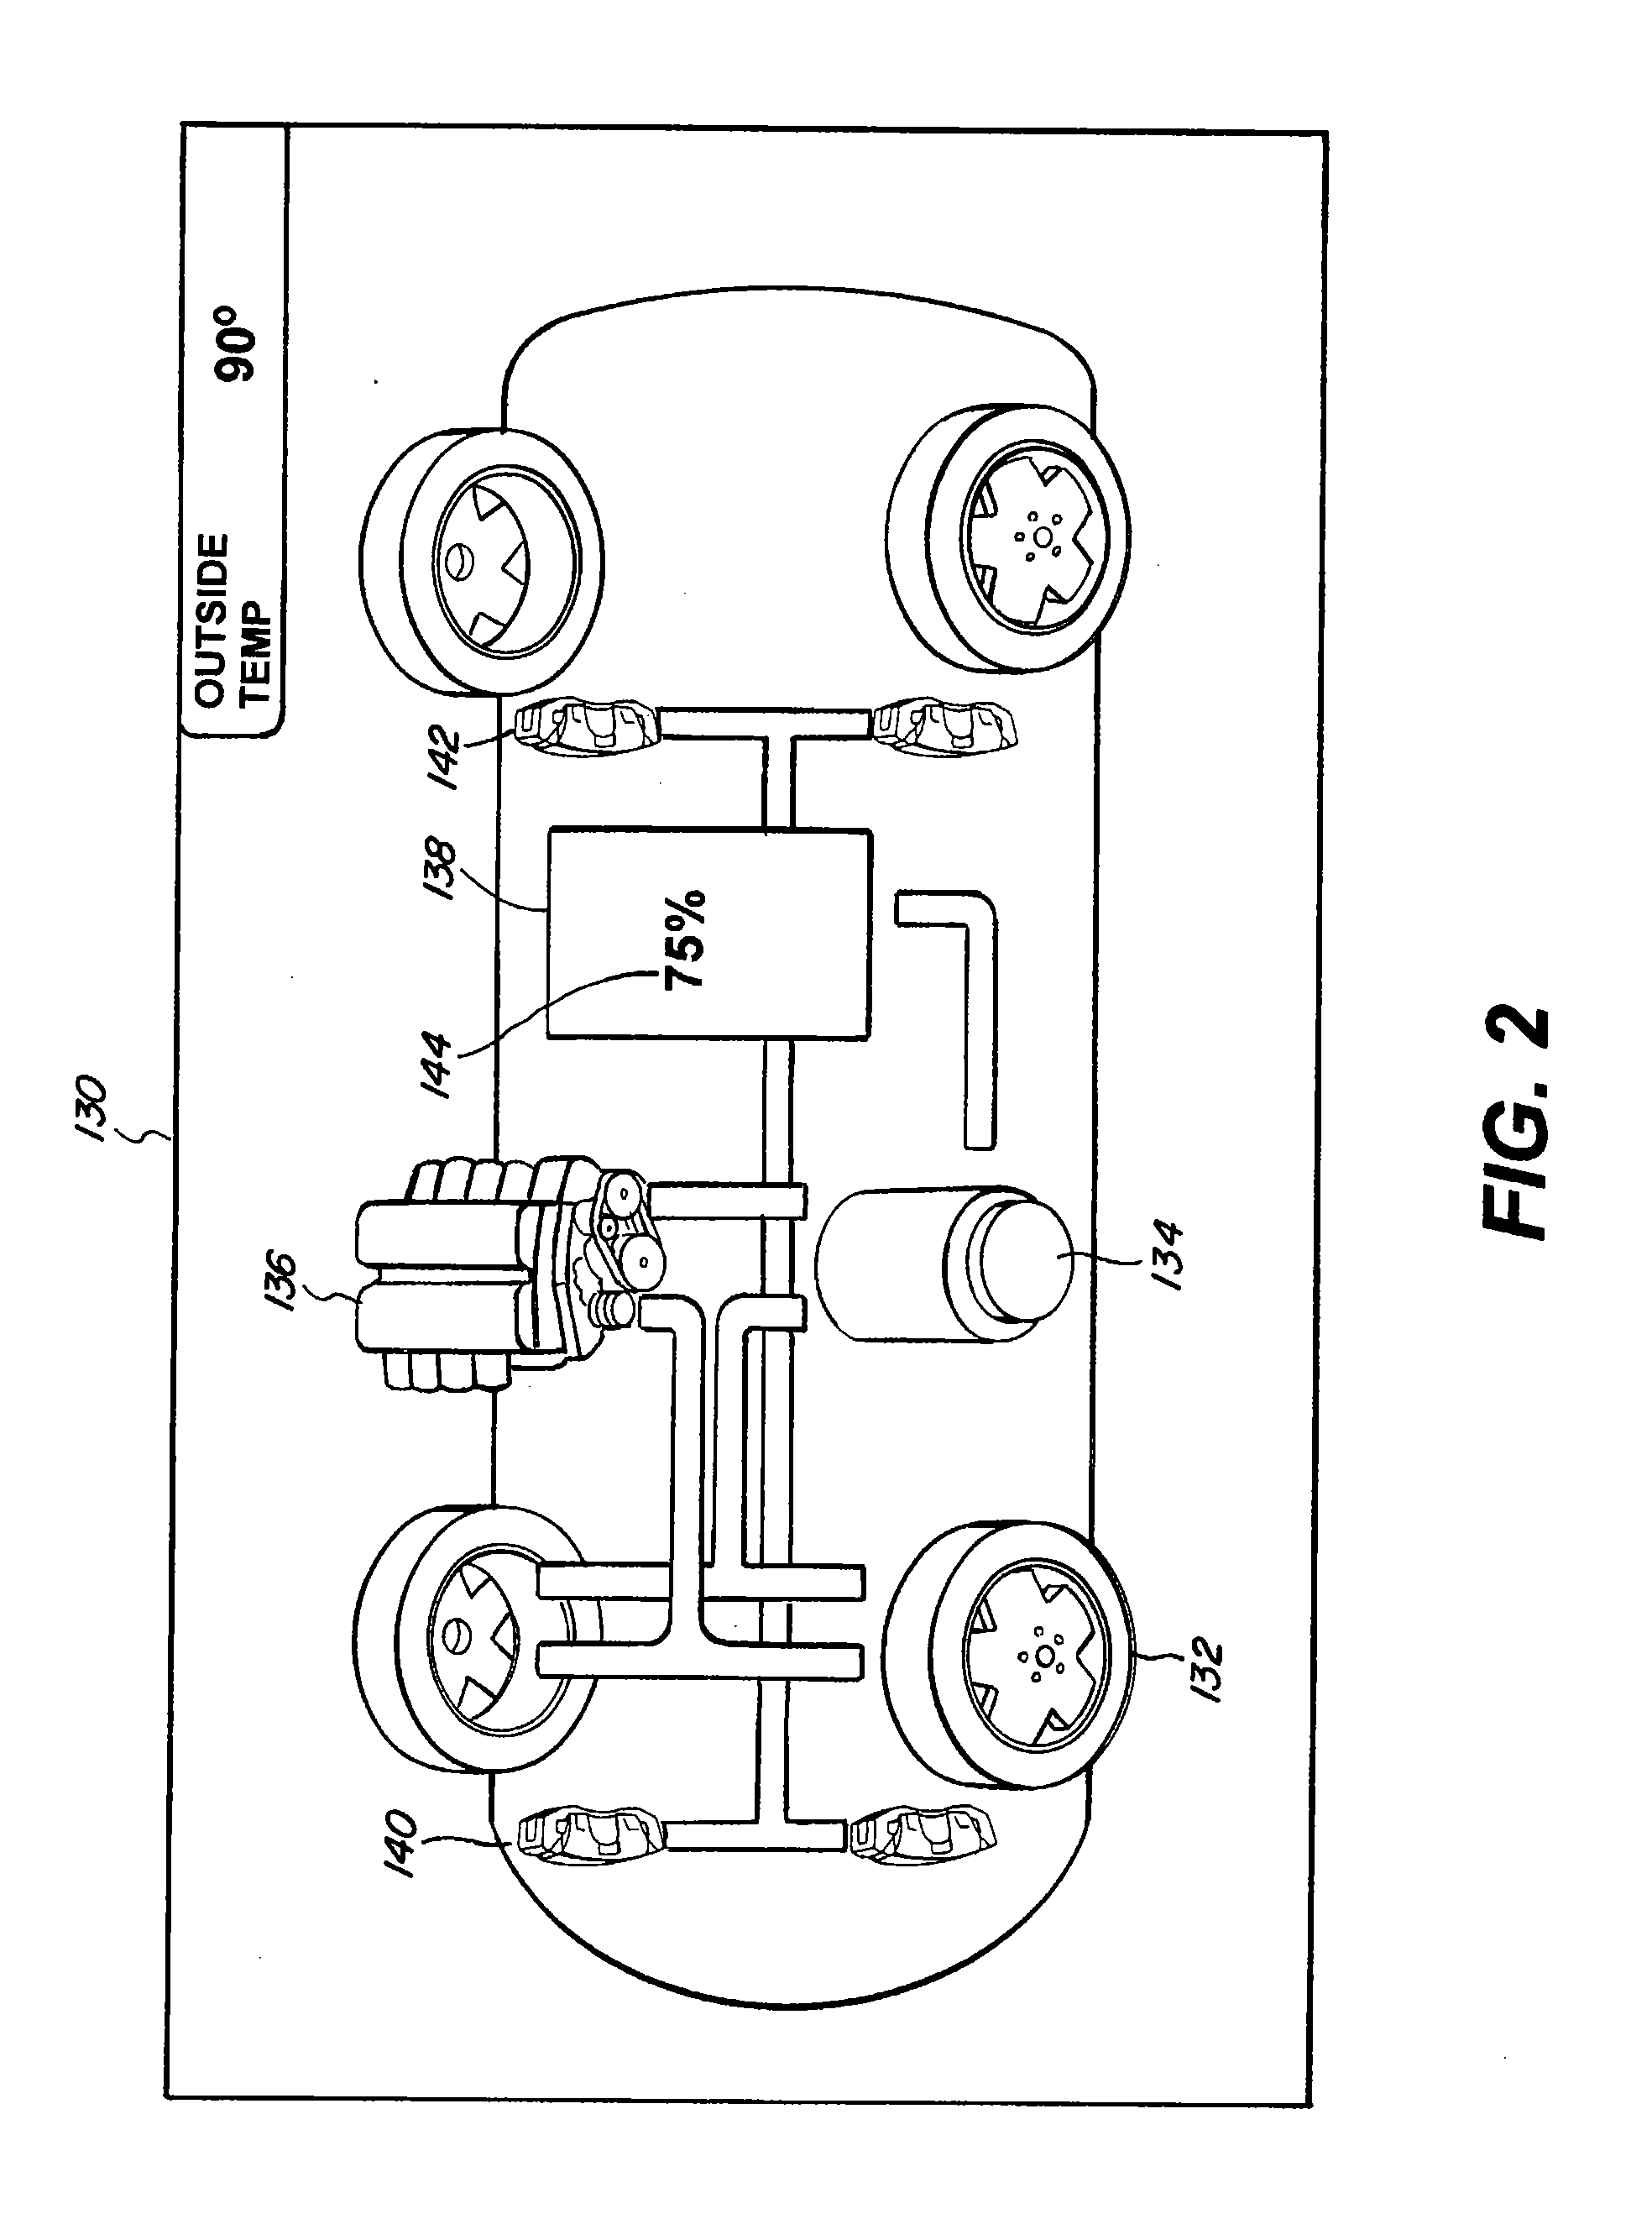 Method and system for displaying braking information